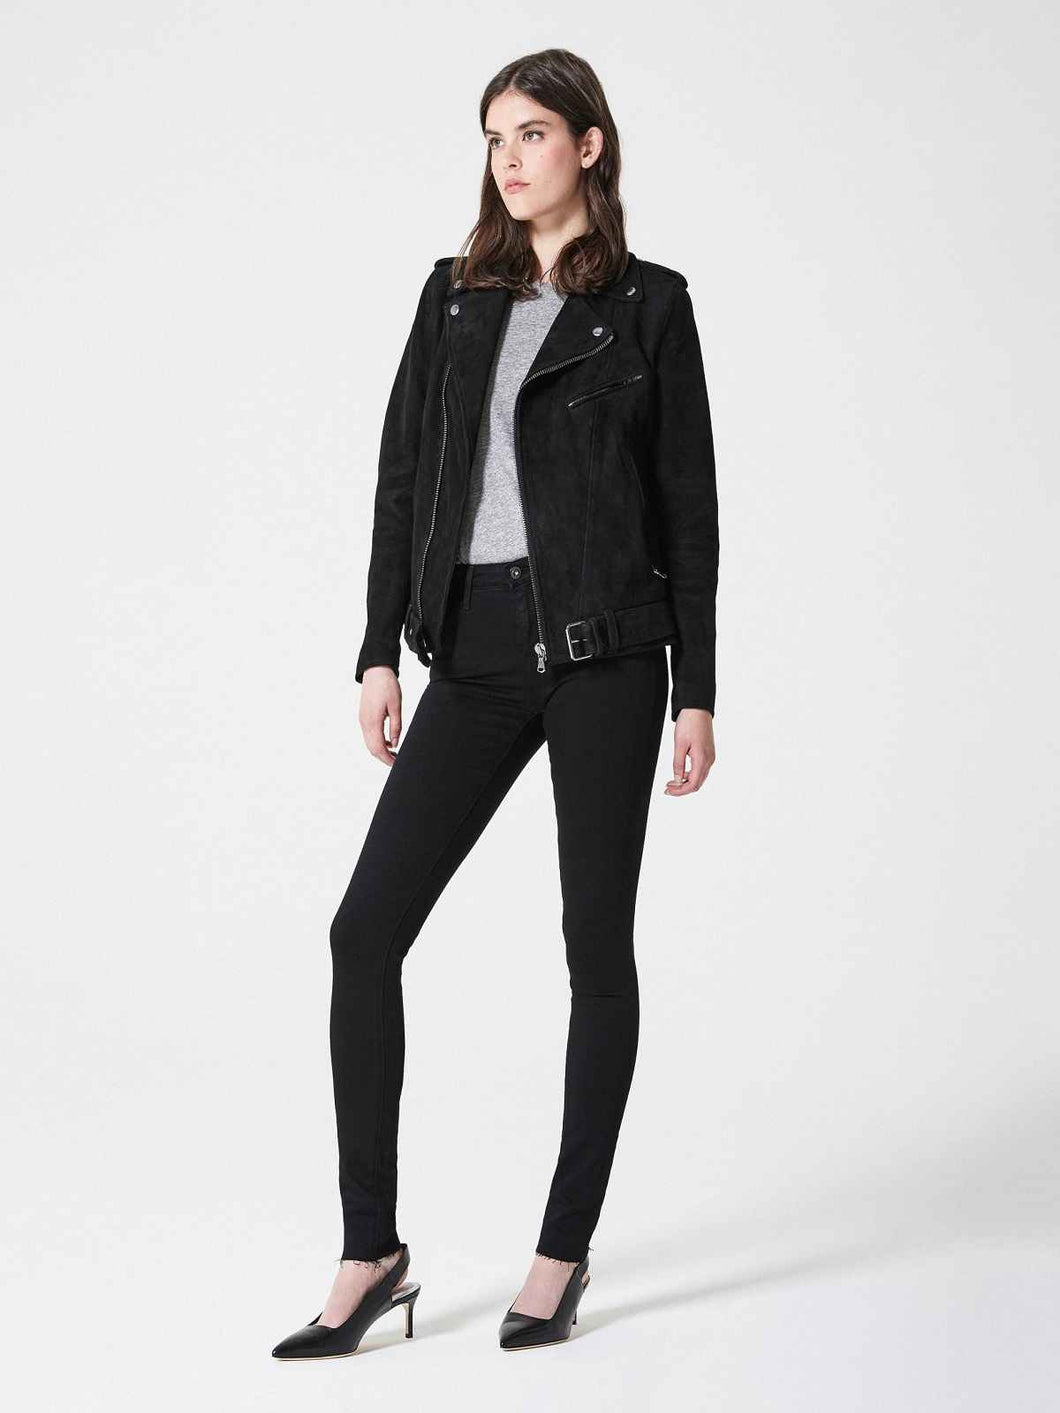 Black Suede Leather Jacket For Women - Boneshia.com